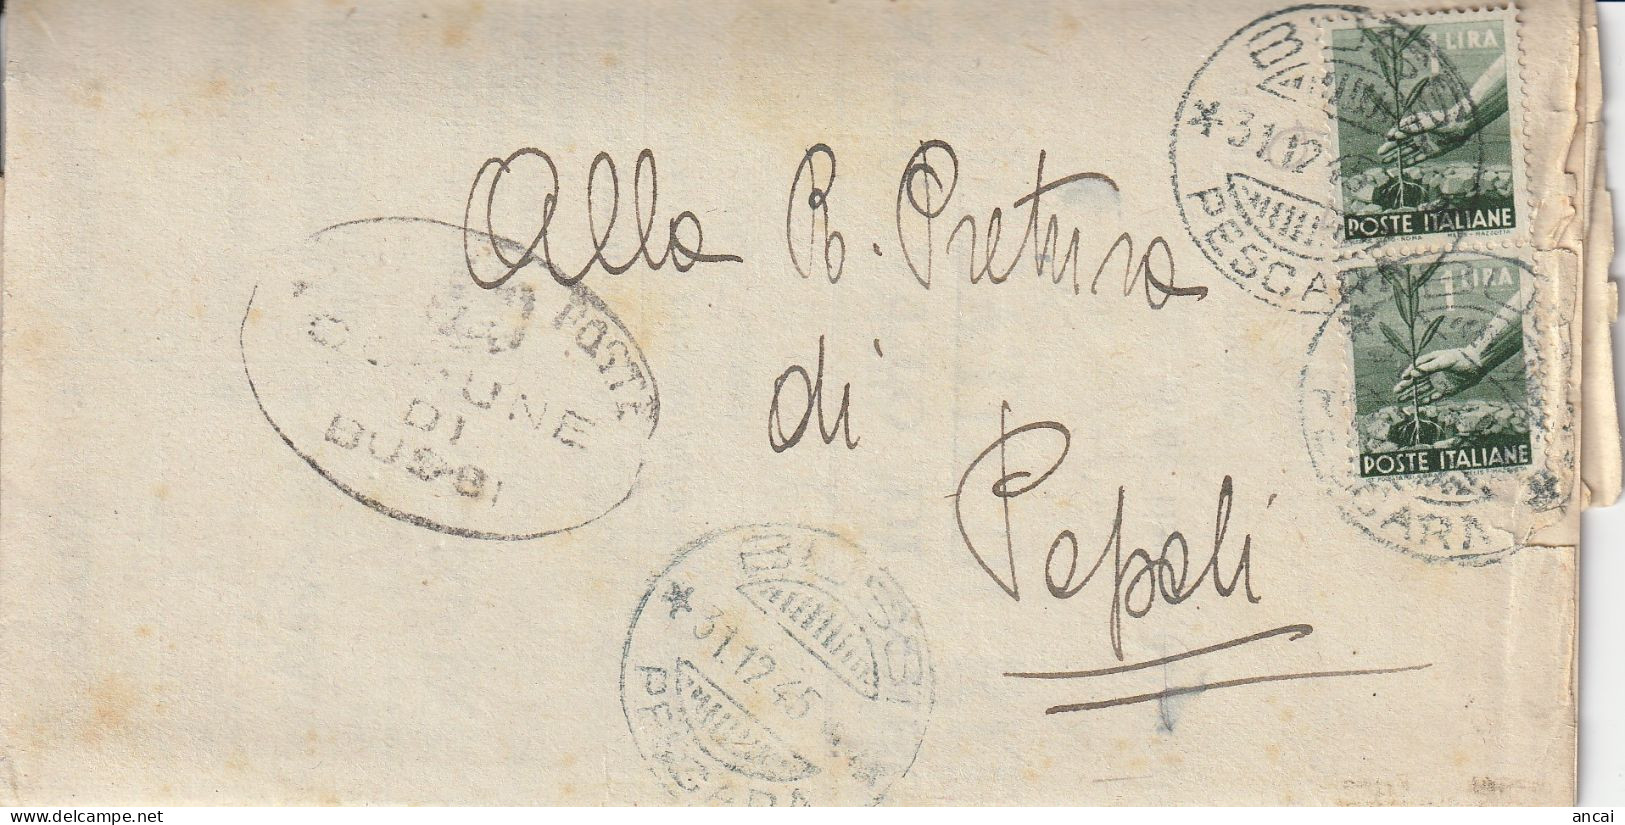 Italy. A163. Bussi. 1945. Stampe Da BUSSI *PESCARA* Per Popoli.  Democratica L. 1 X 2 - Colis-postaux